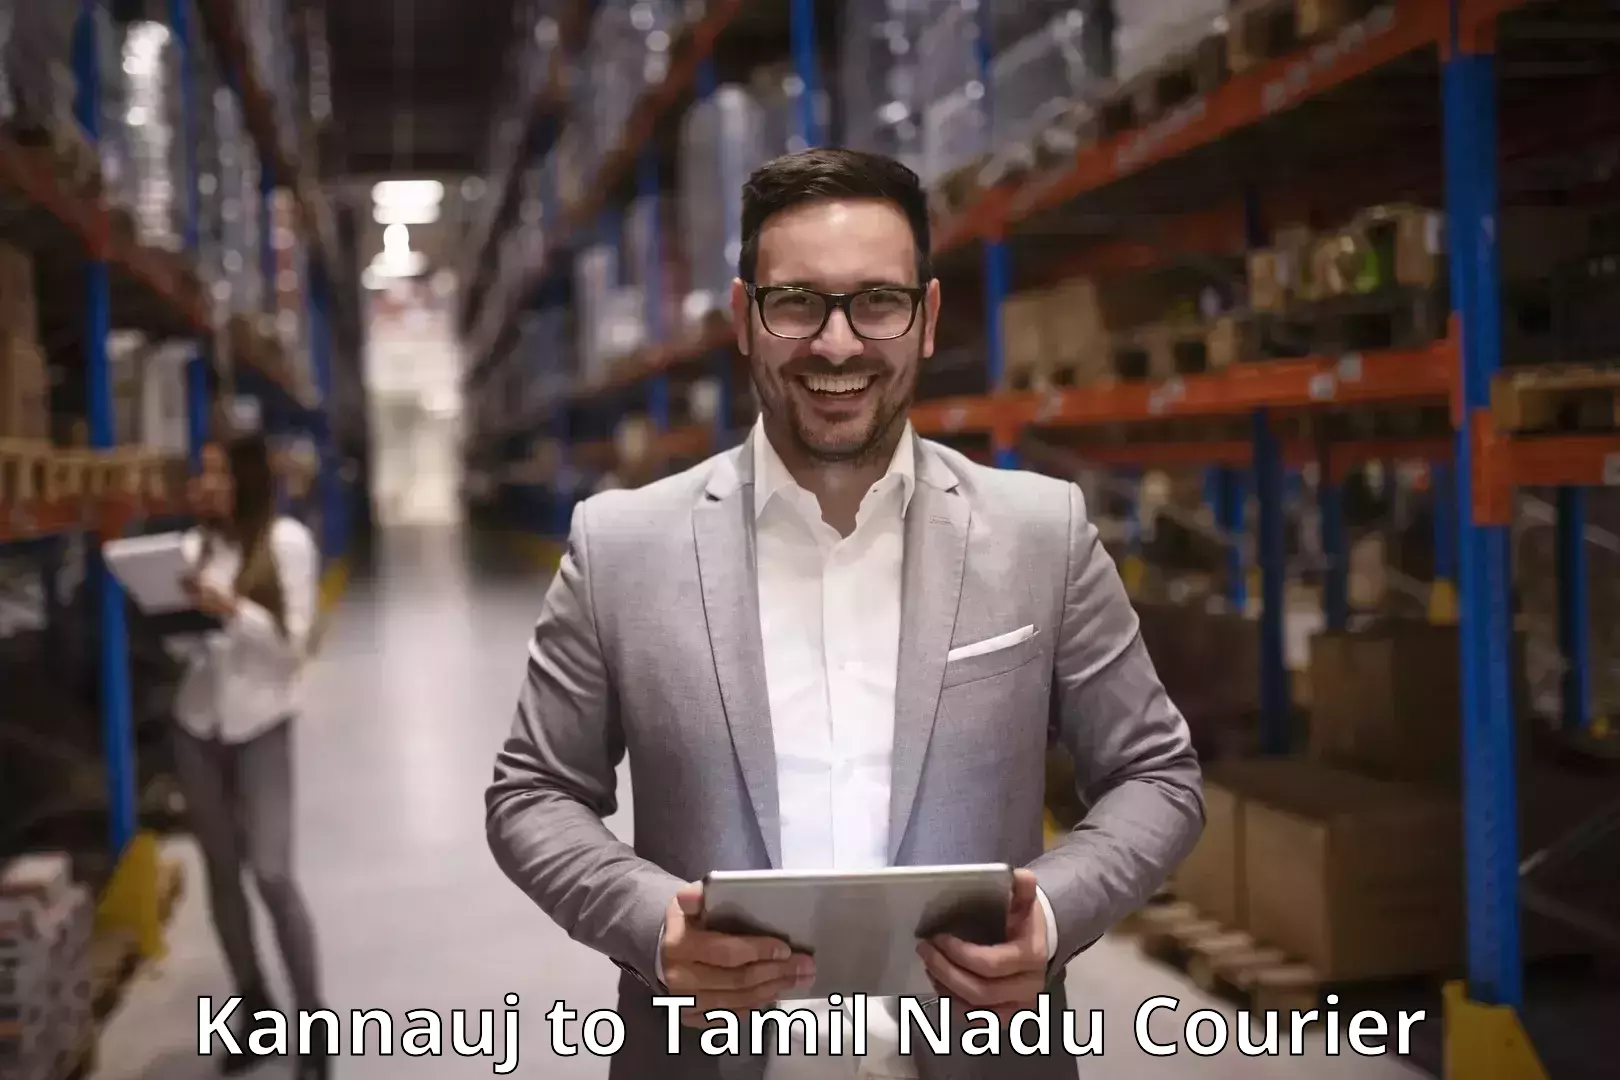 Express logistics service Kannauj to Tamil Nadu